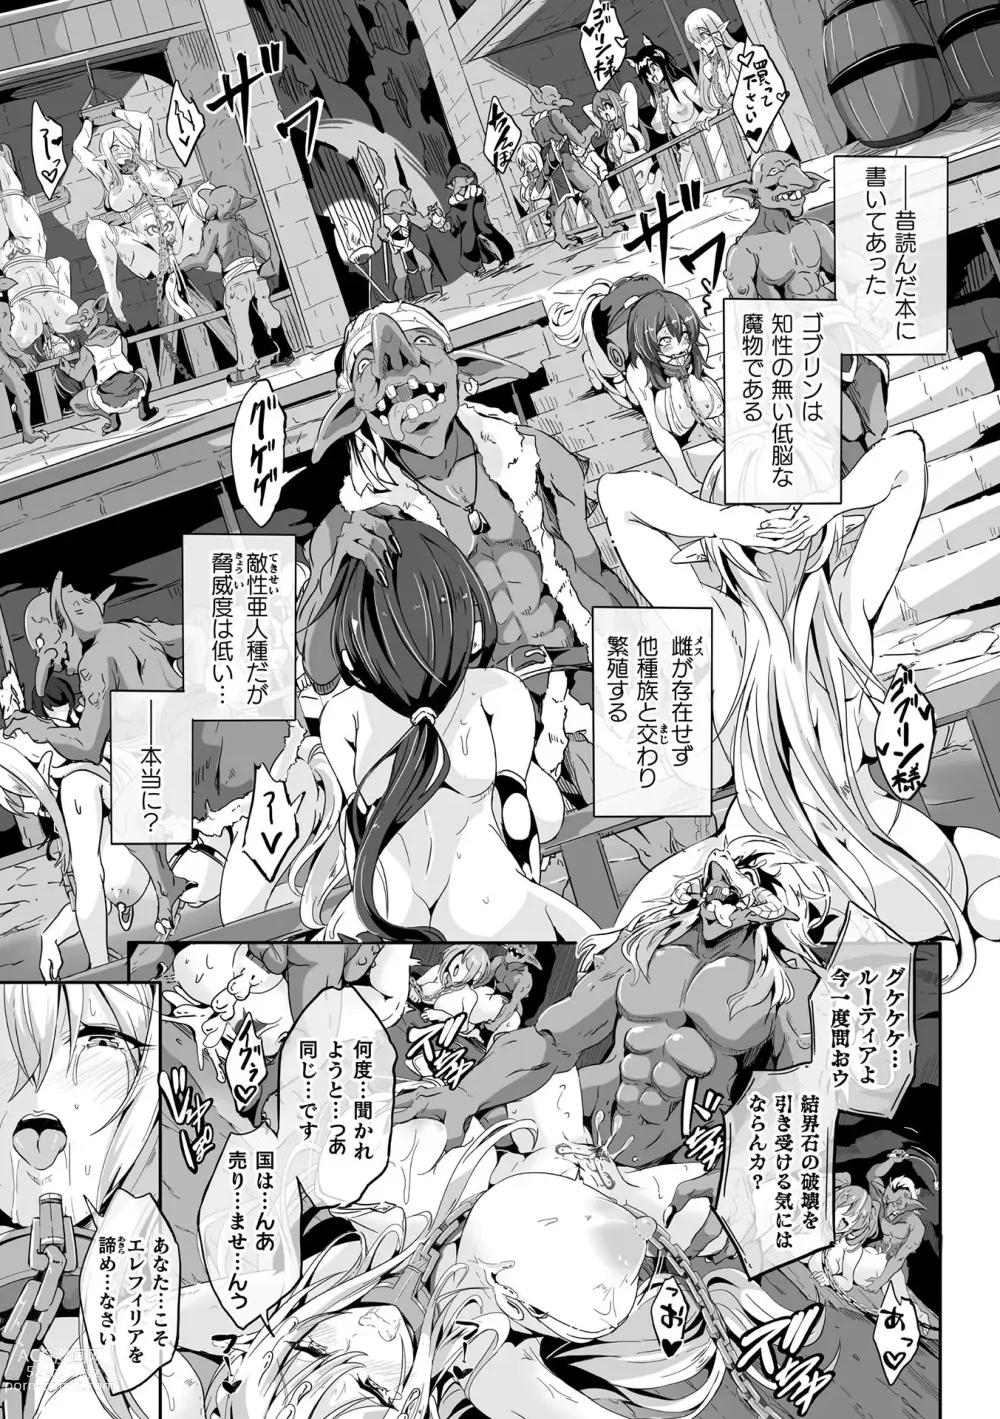 Page 7 of manga Kukkoro Heroines Vol. 28